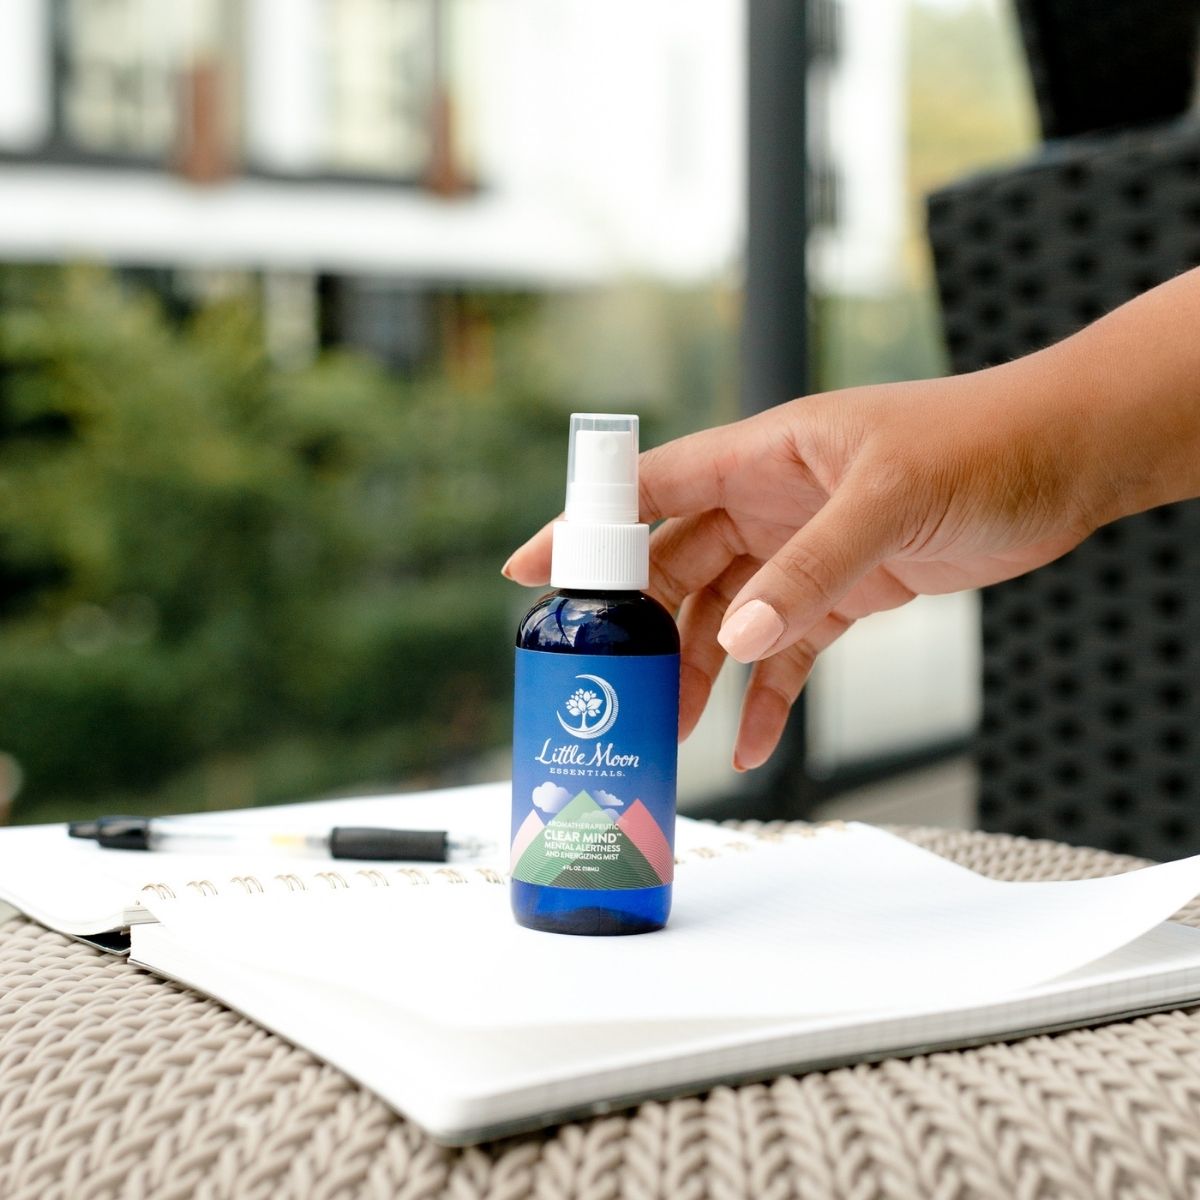 Study Buddy | Energizing Aromatherapy Spray